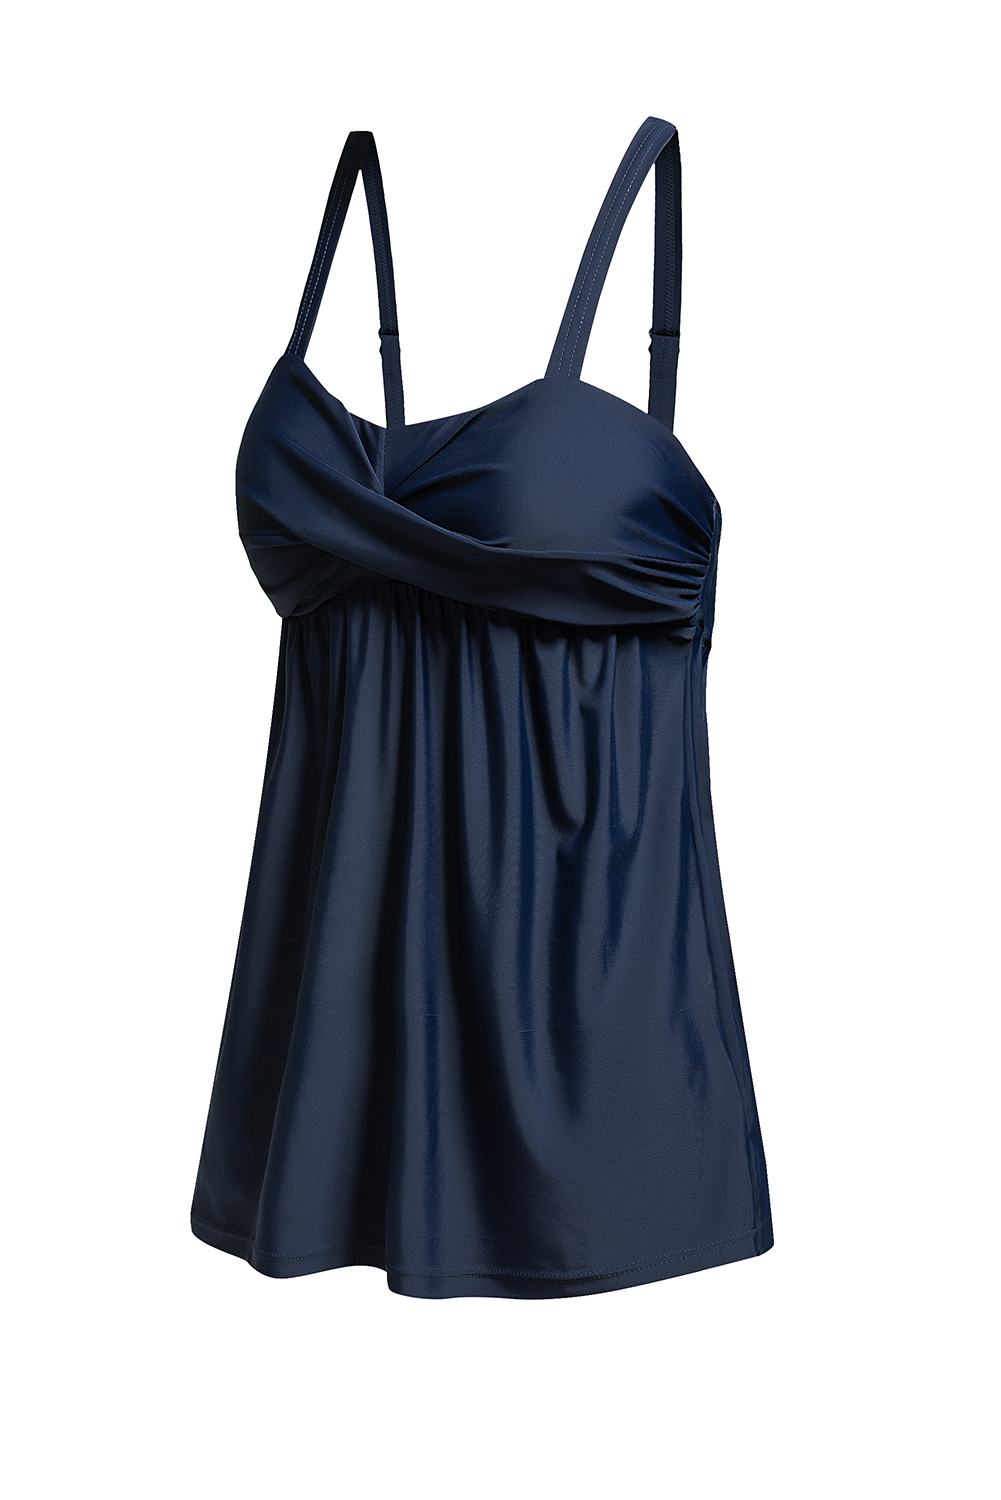 $7.98 Navy Blue 2pcs Swing Tankini Swimsuit Wholesale